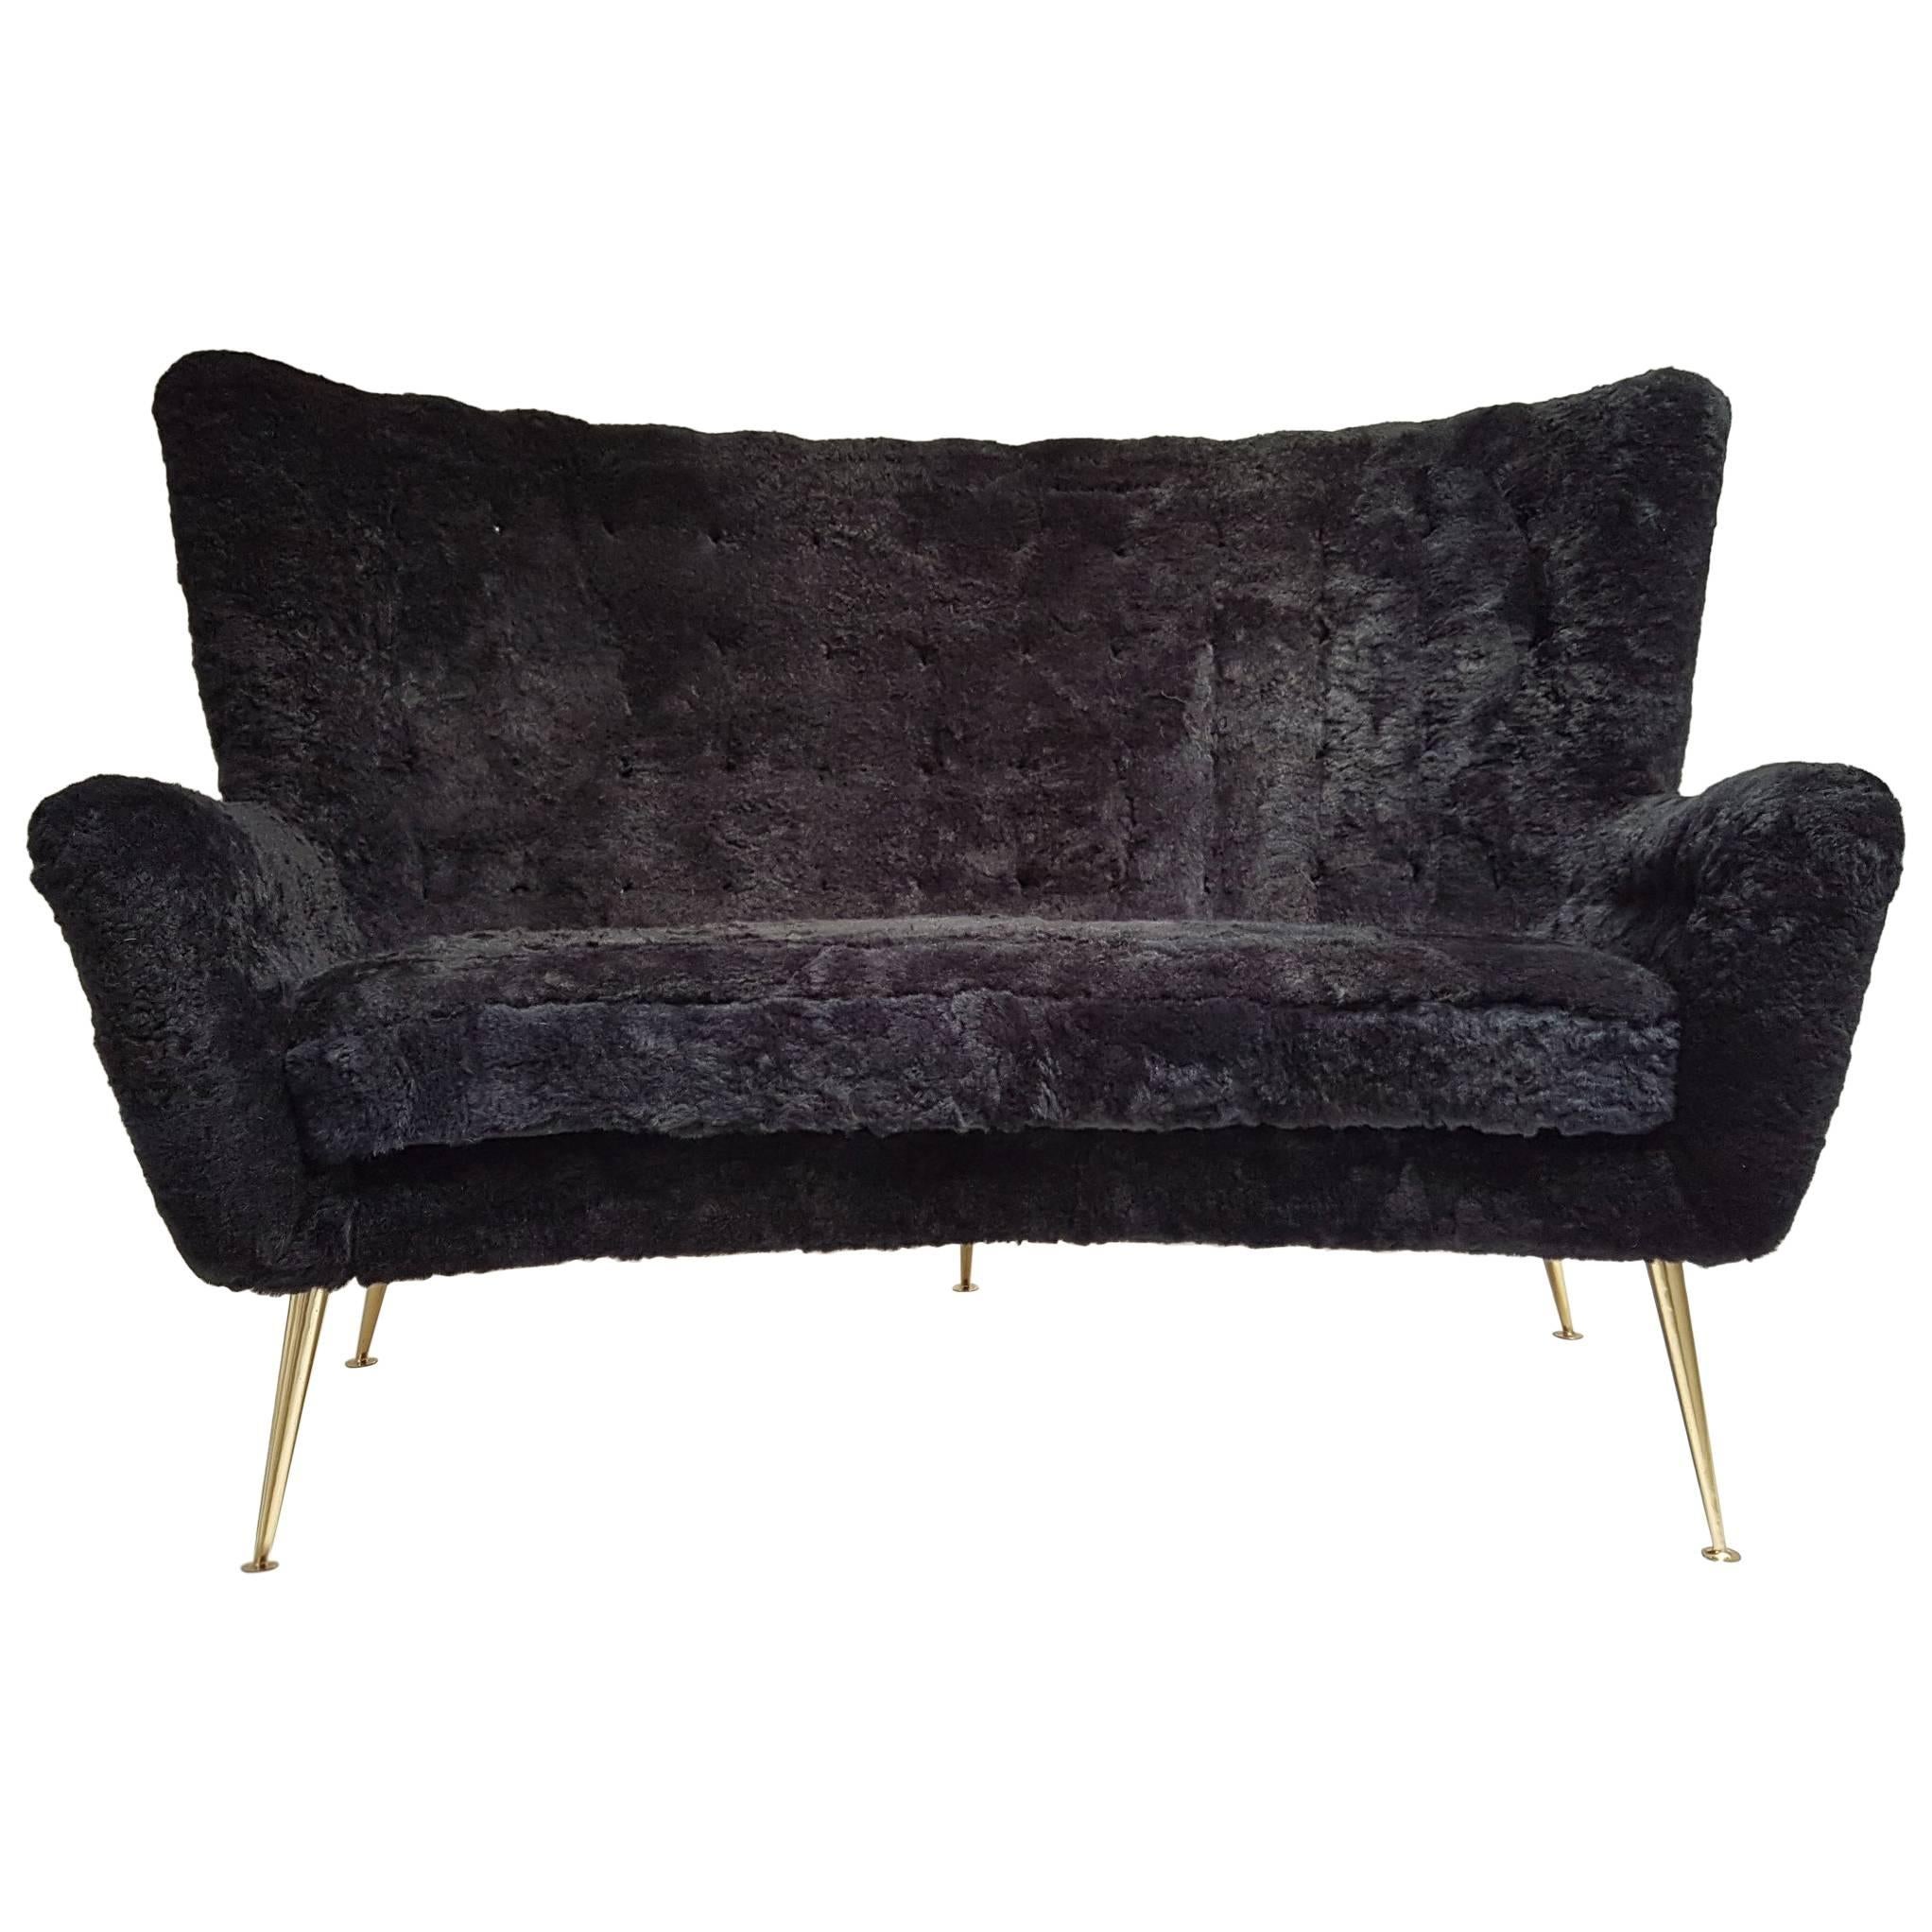 Italian Vintage Sofa, circa 1900, Black Lambskin Upholstery, Brass Legs For Sale